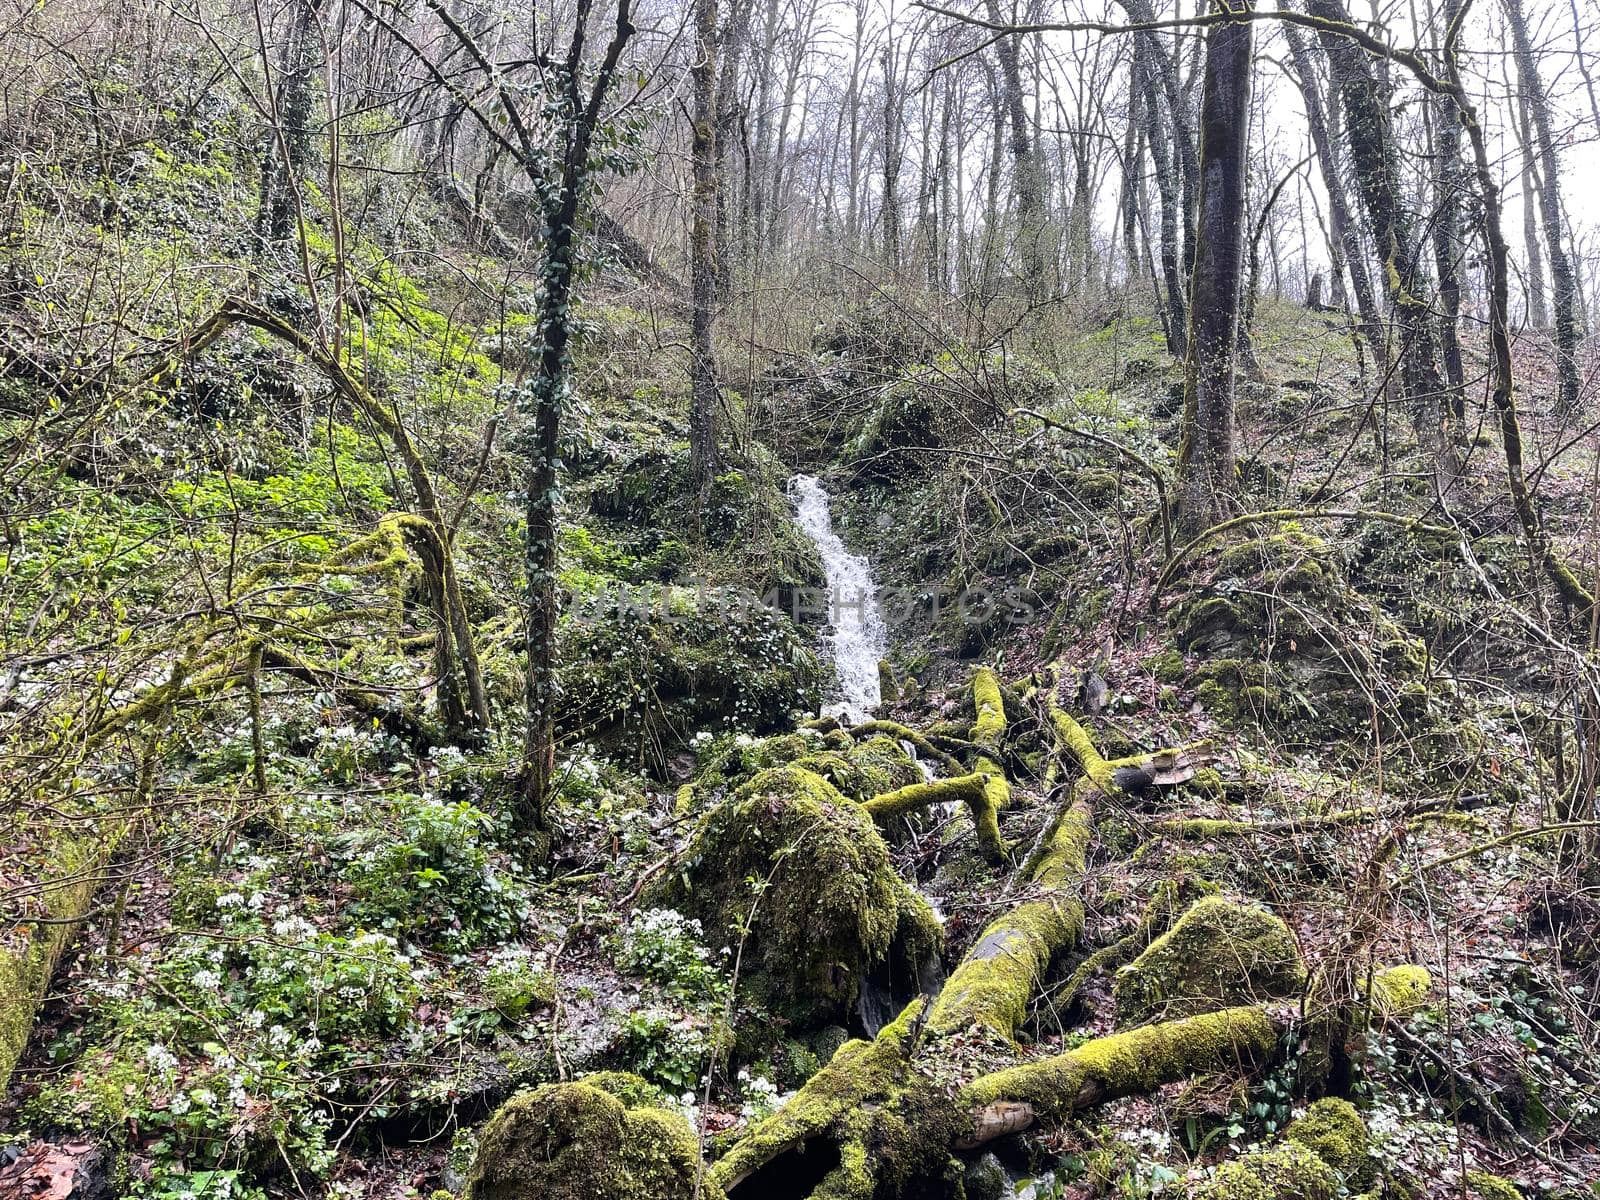 Small rapid stream flowing on rocks. Mountain clean waterway flowing down through mountainous terrain in wood